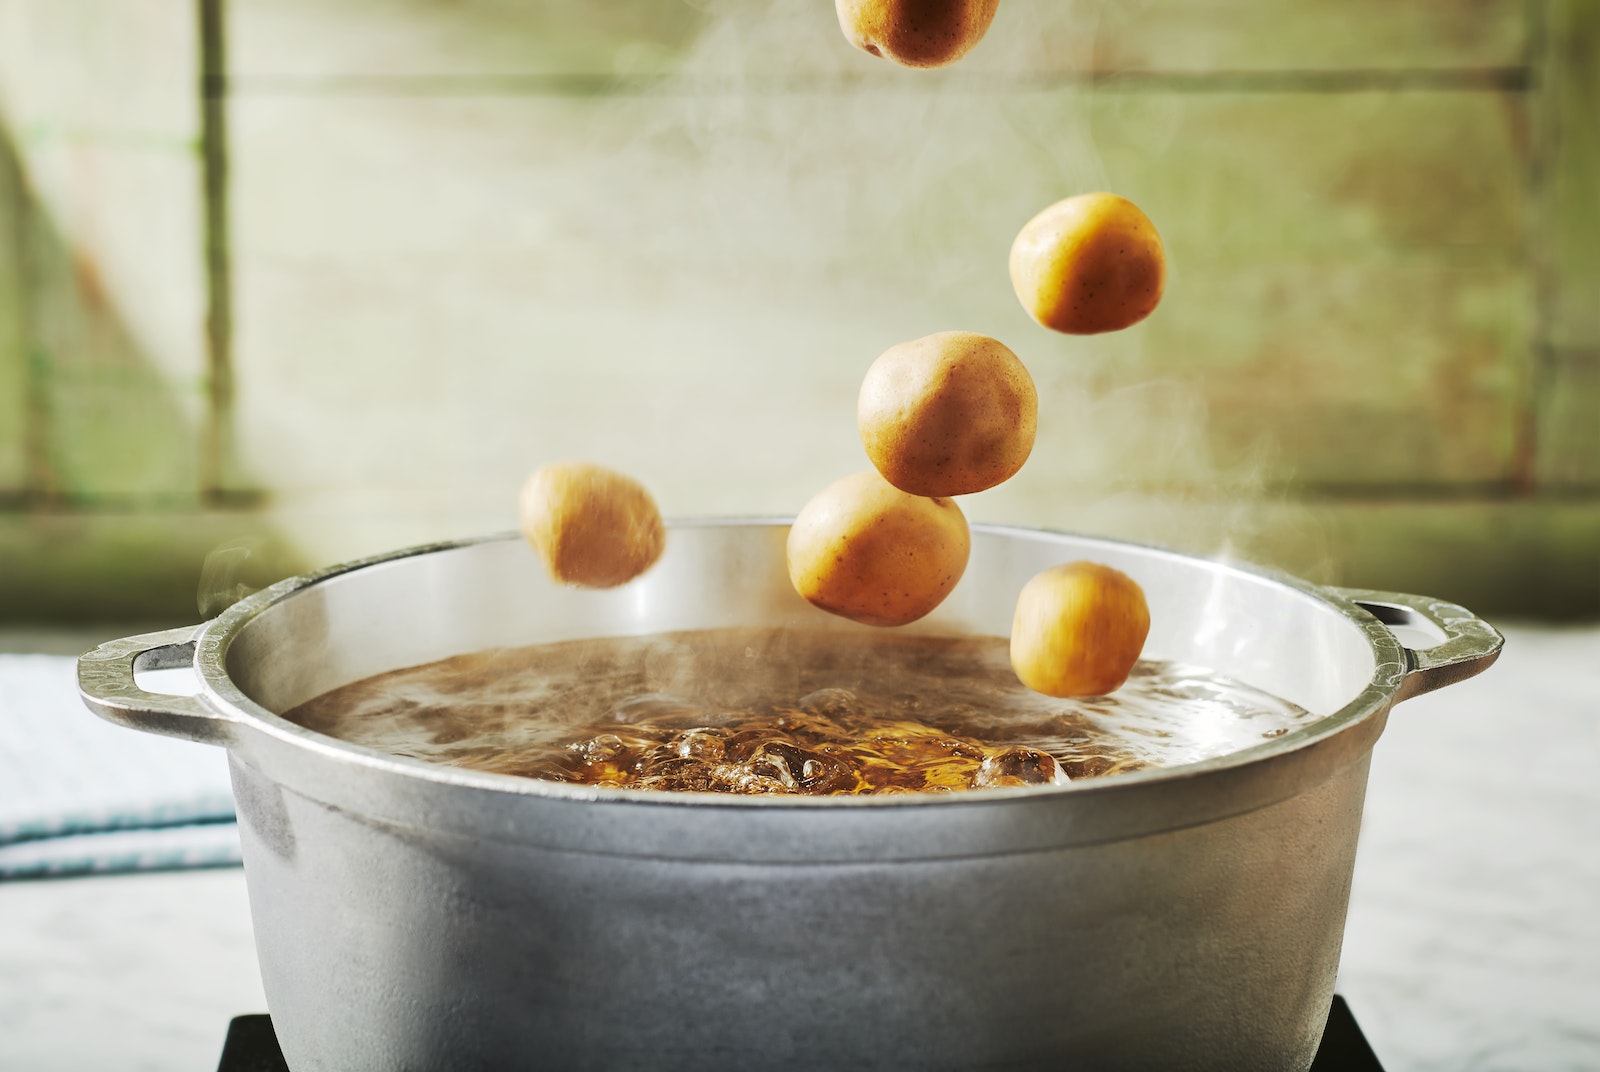 https://www.littlepotatoes.com/wp-content/uploads/2020/09/How-to-Boil-Little-Potatoes-Feature-Image.jpg